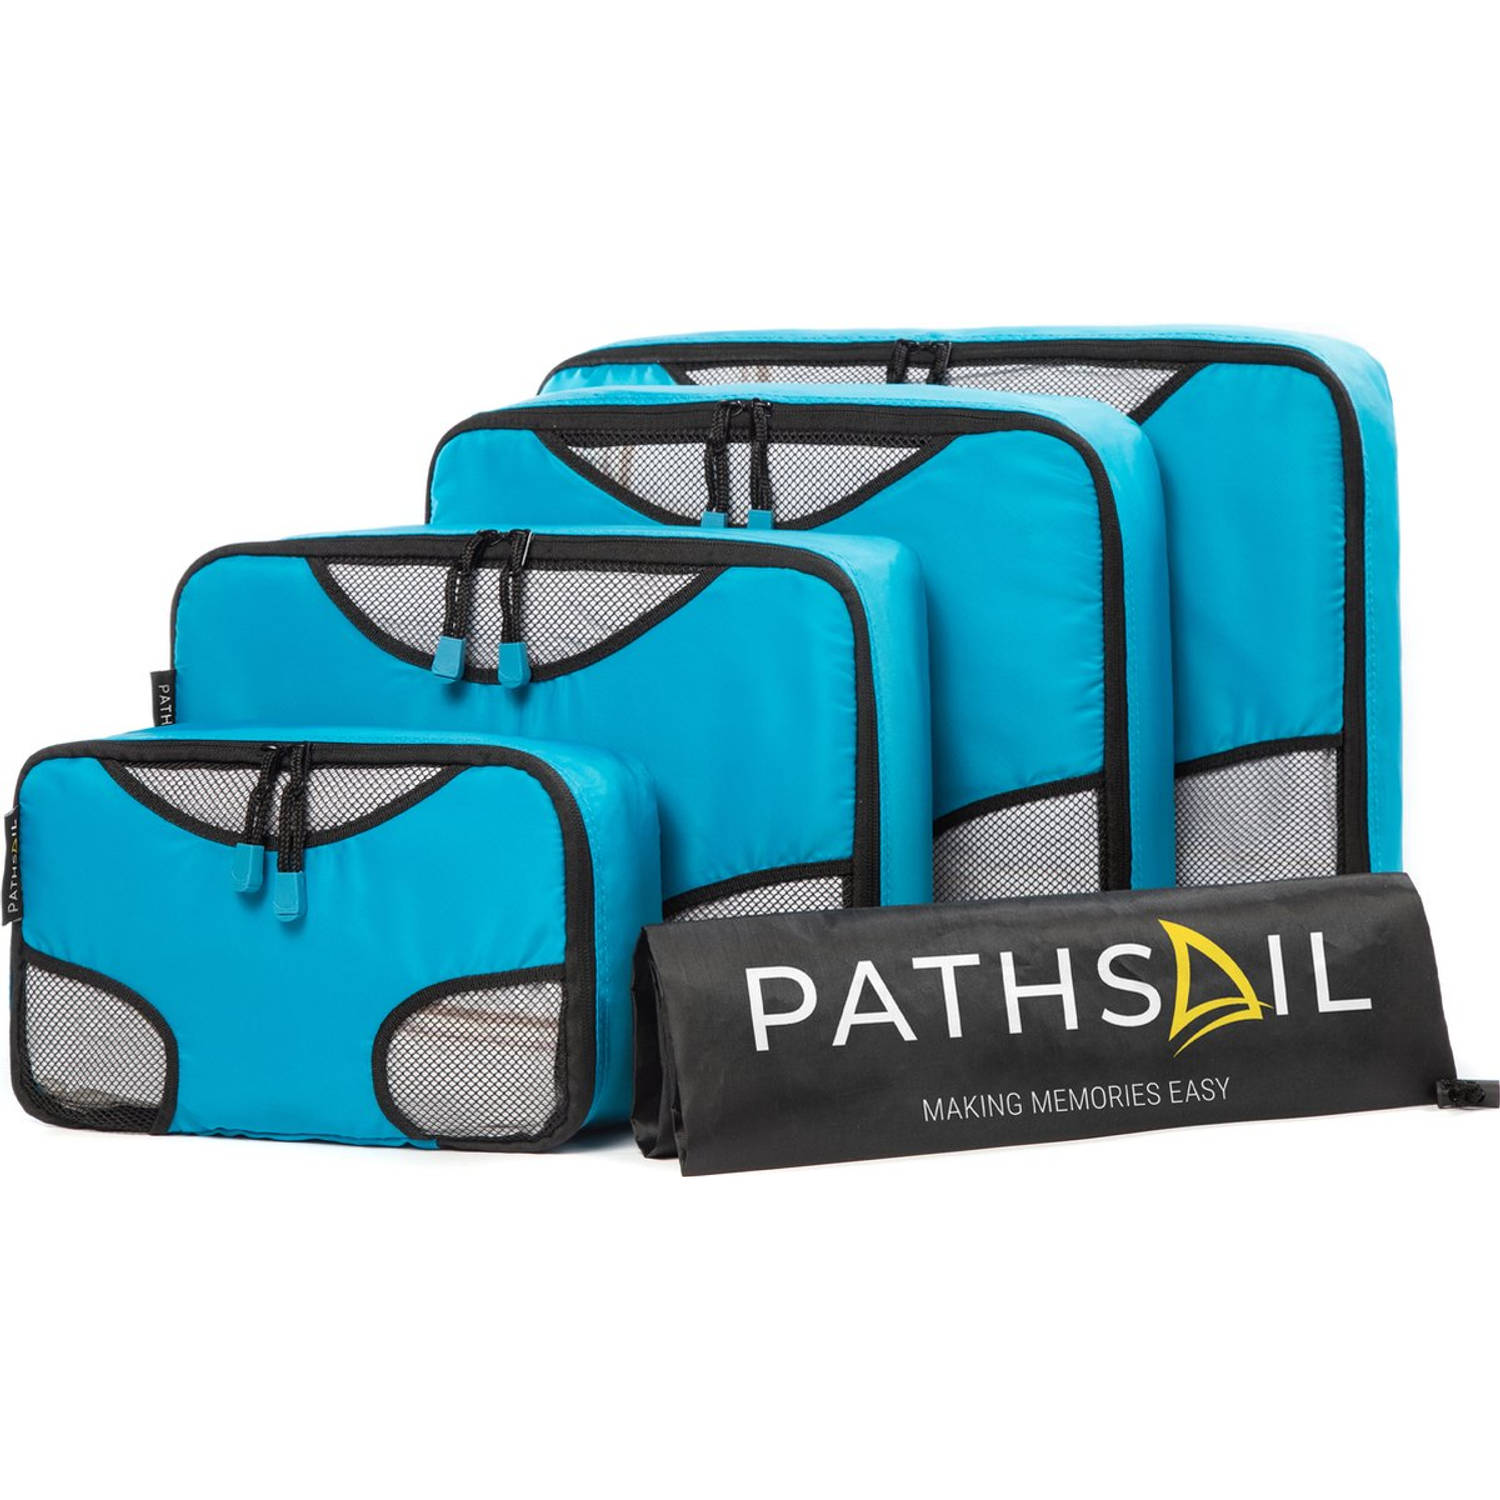 Pathsail - Packing Cube - PSA003 - Dark Blue